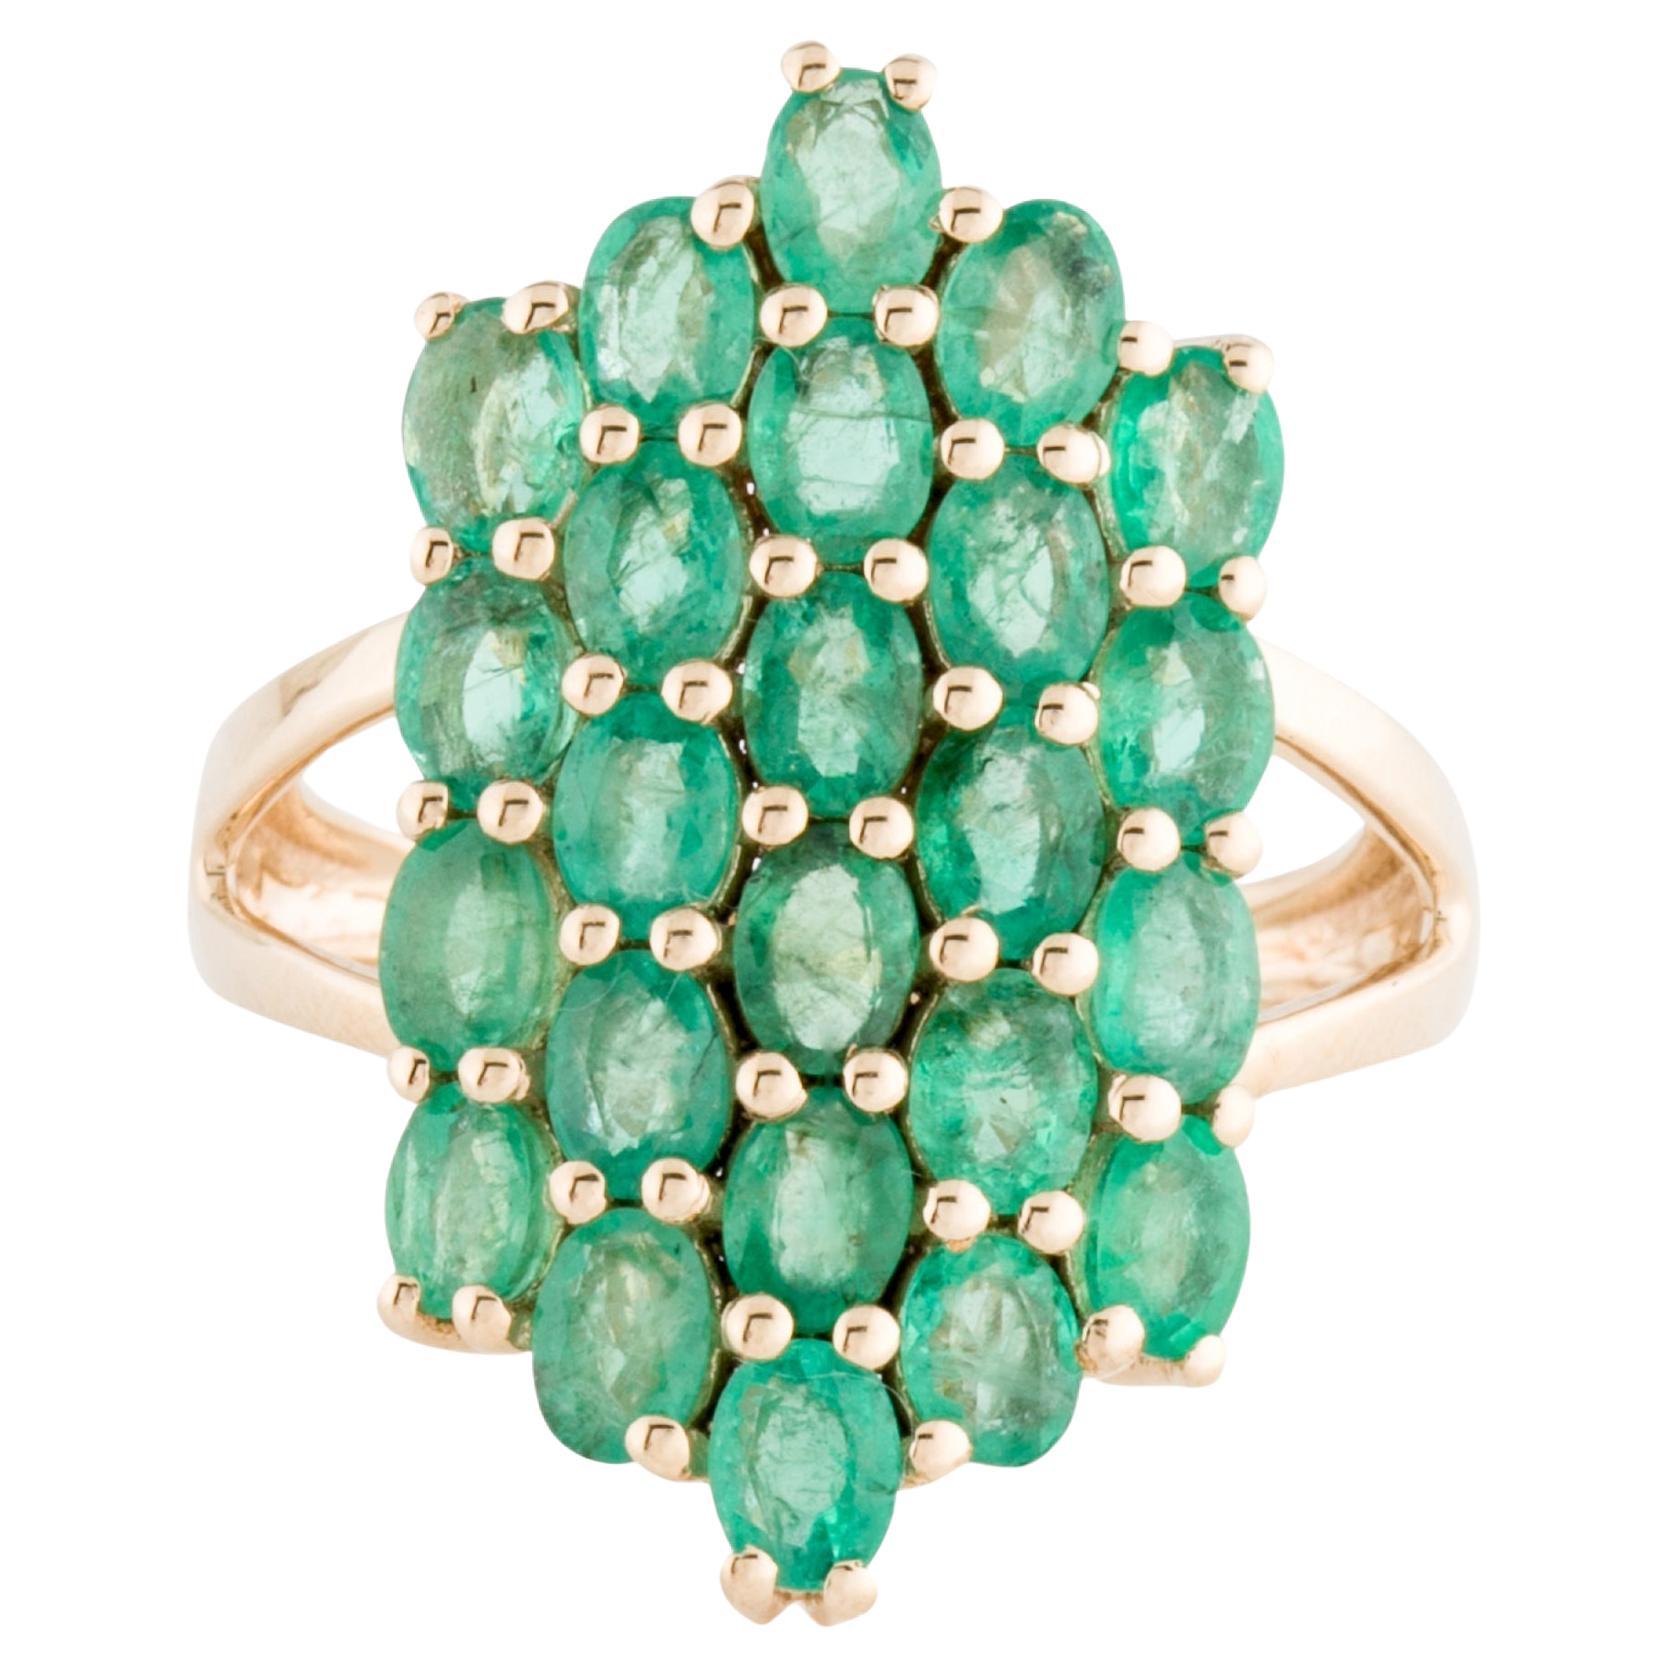 Gorgeous 14K Emerald Cocktail Ring - 2.59ctw Gemstones - Size 6.75 Vintage Ring